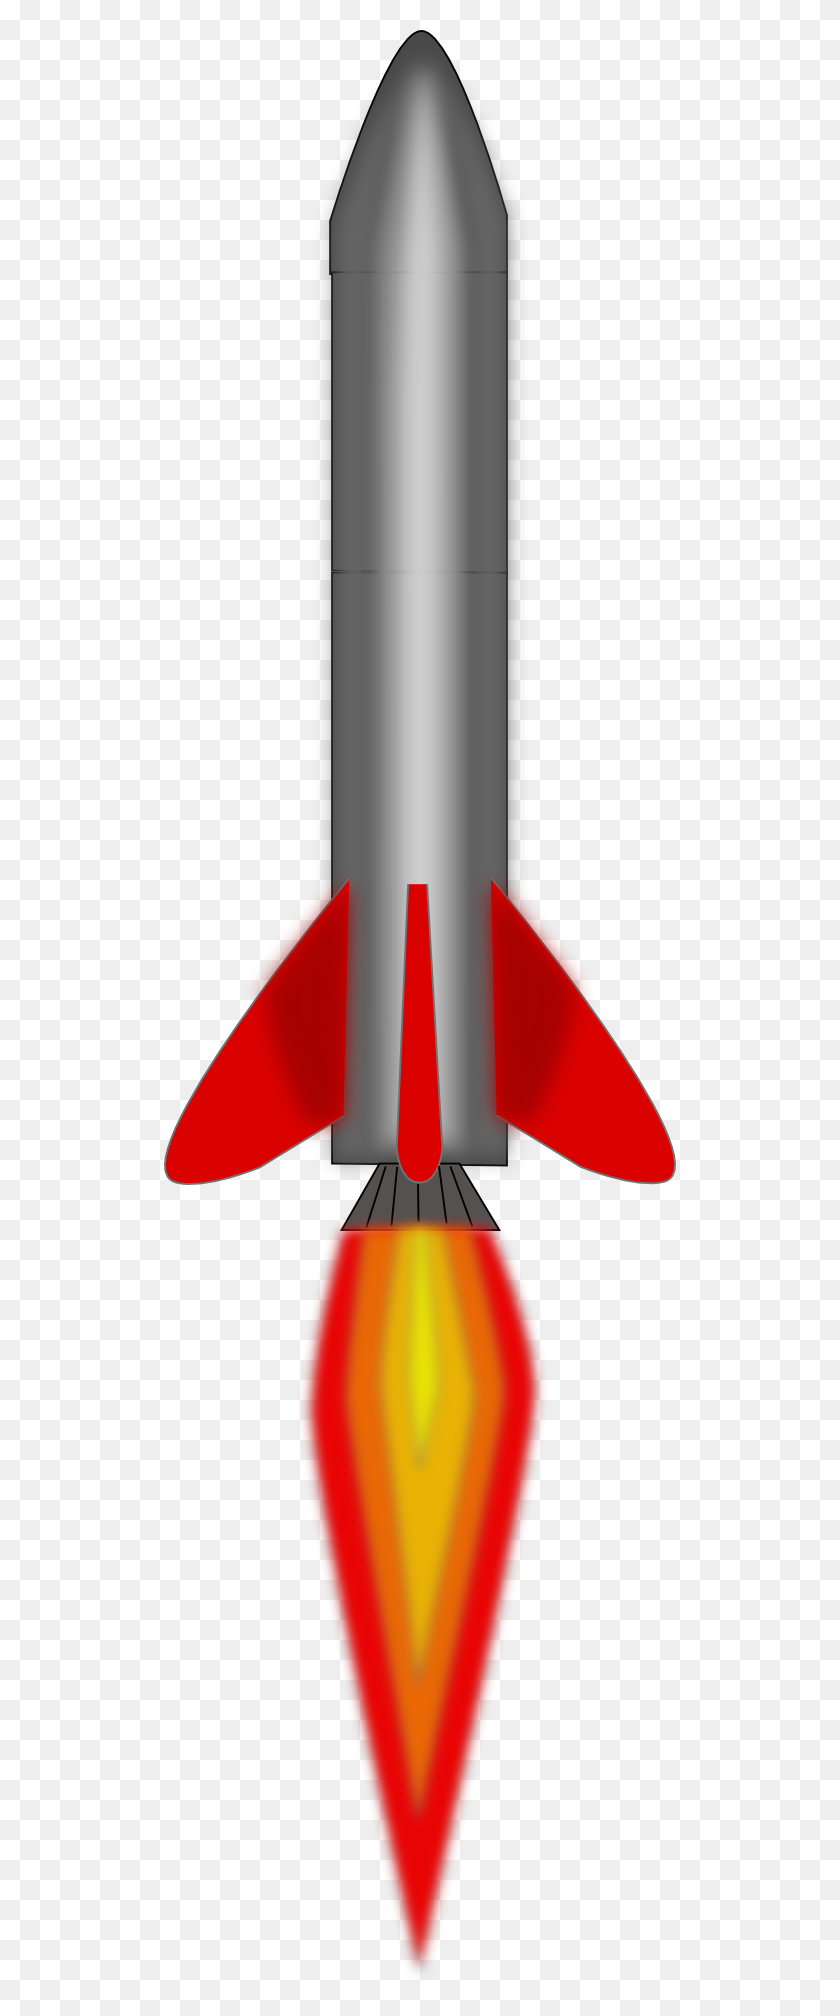 512x1956 Free Rocket Images - Rocket Blast Off Clipart